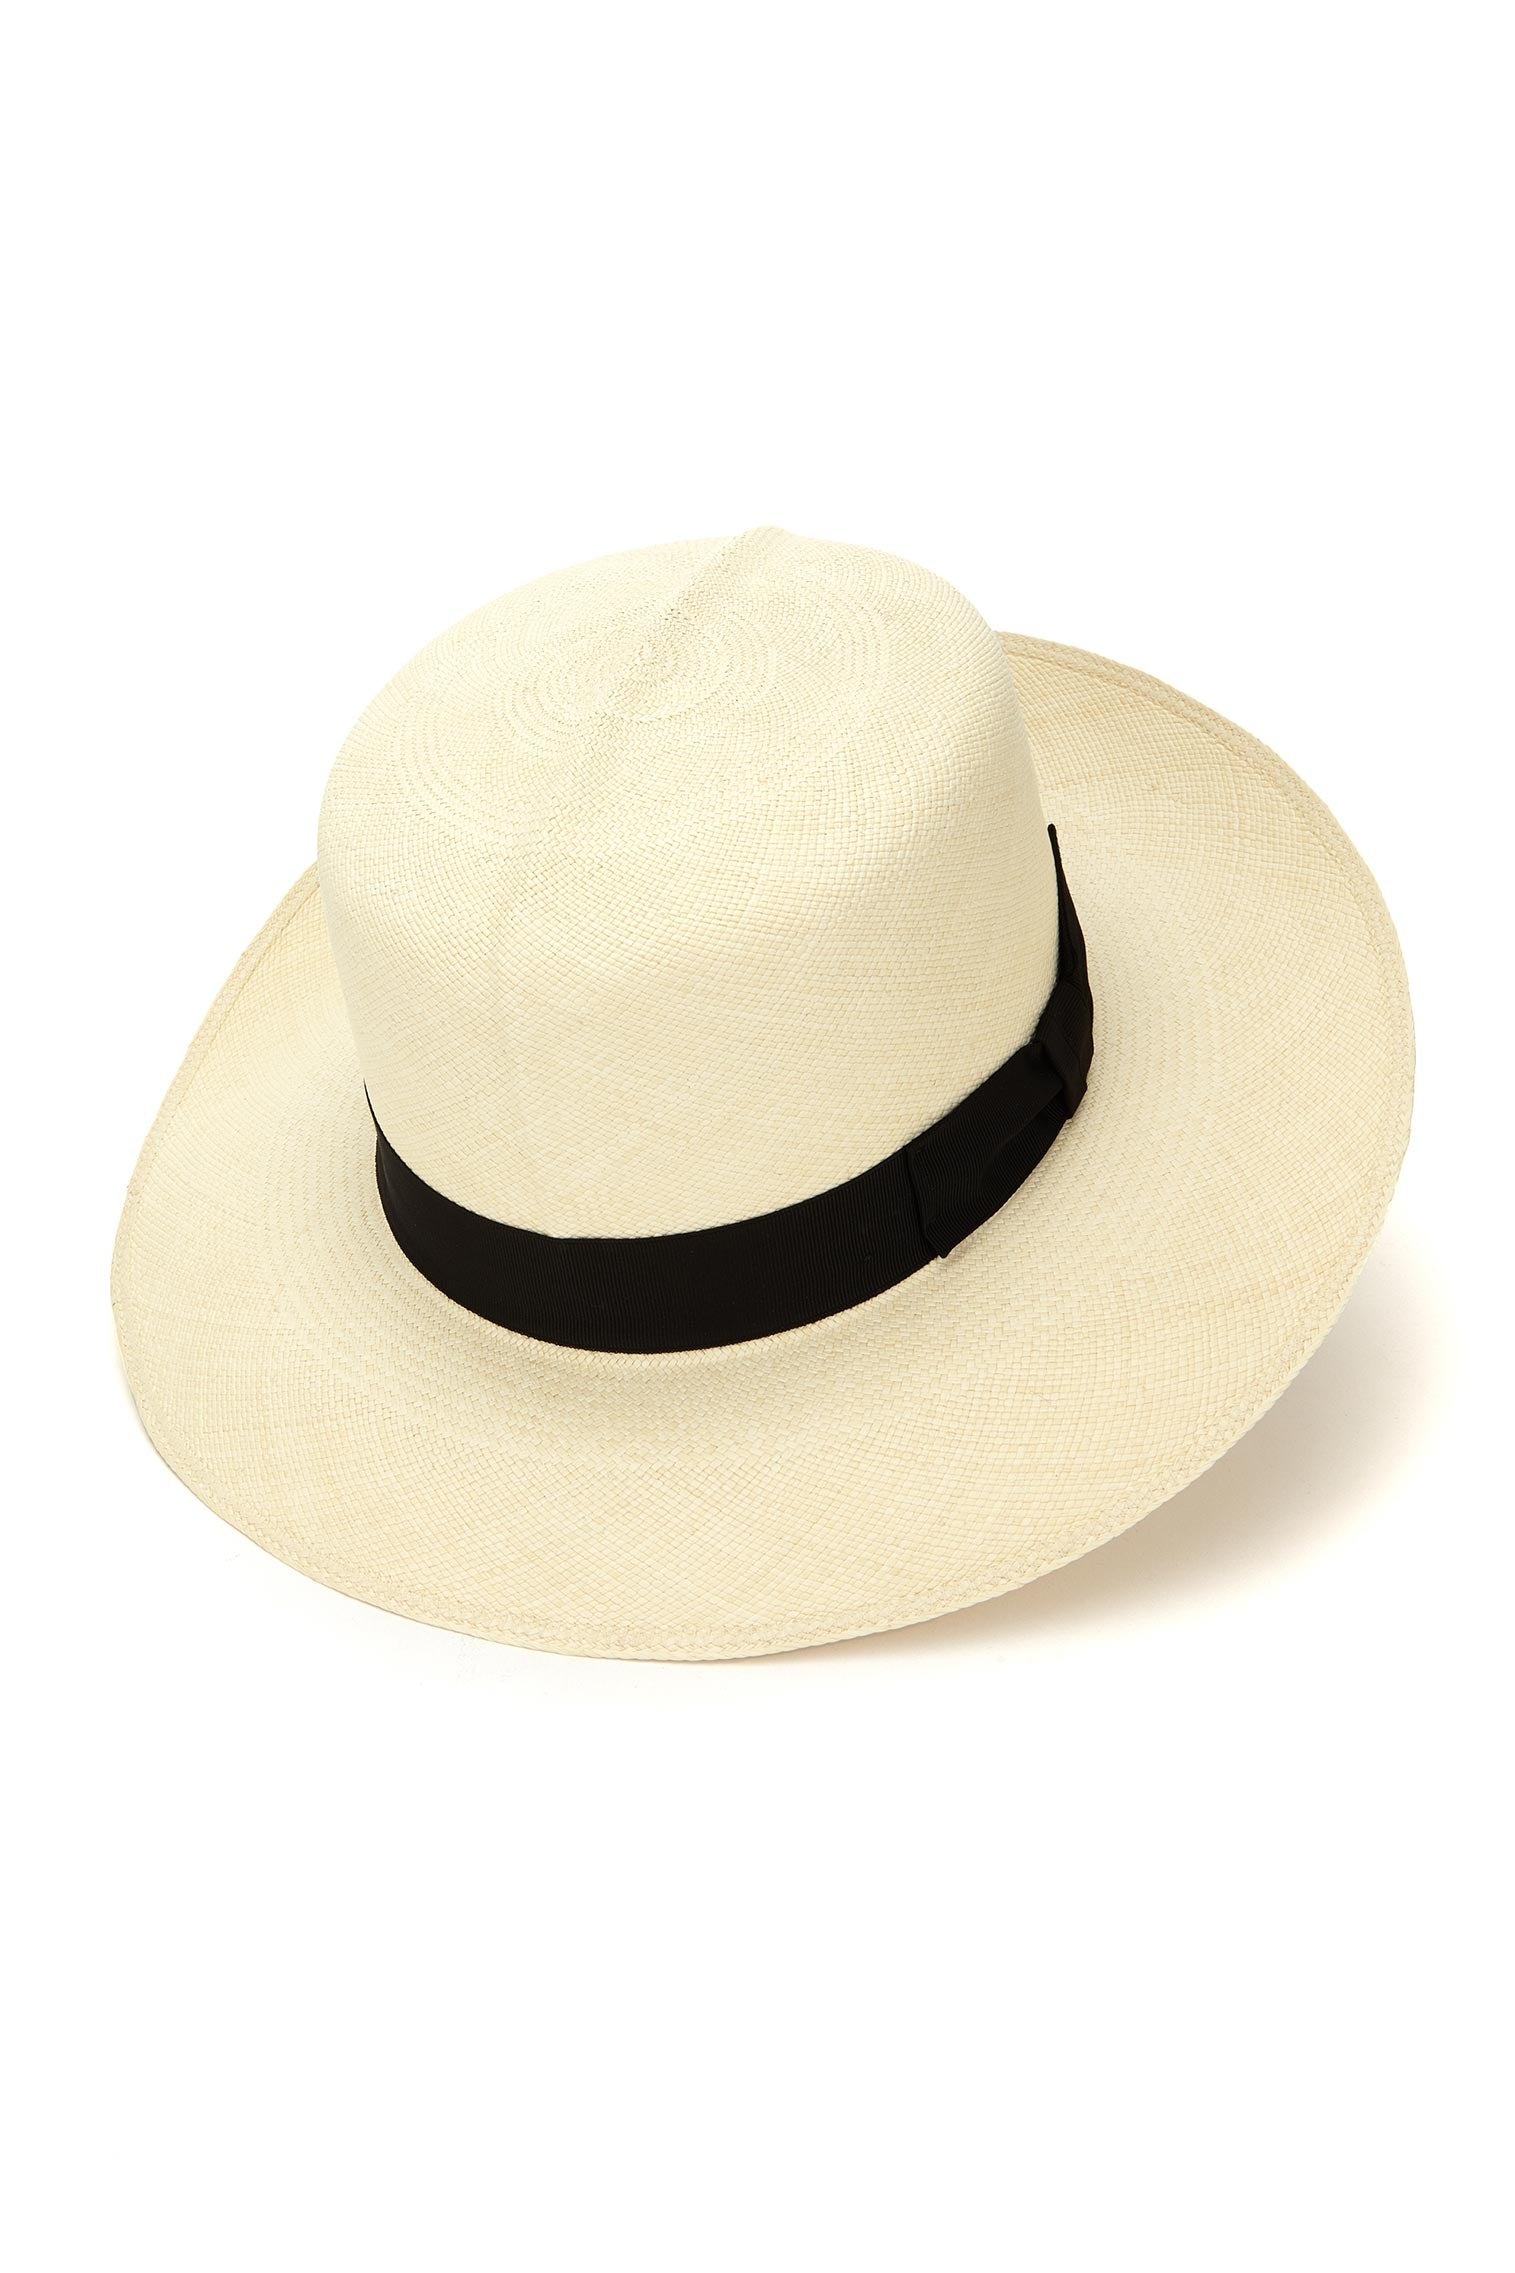 Rollable Superfino Montecristi Panama - Panama Hats - Lock & Co. Hatters London UK